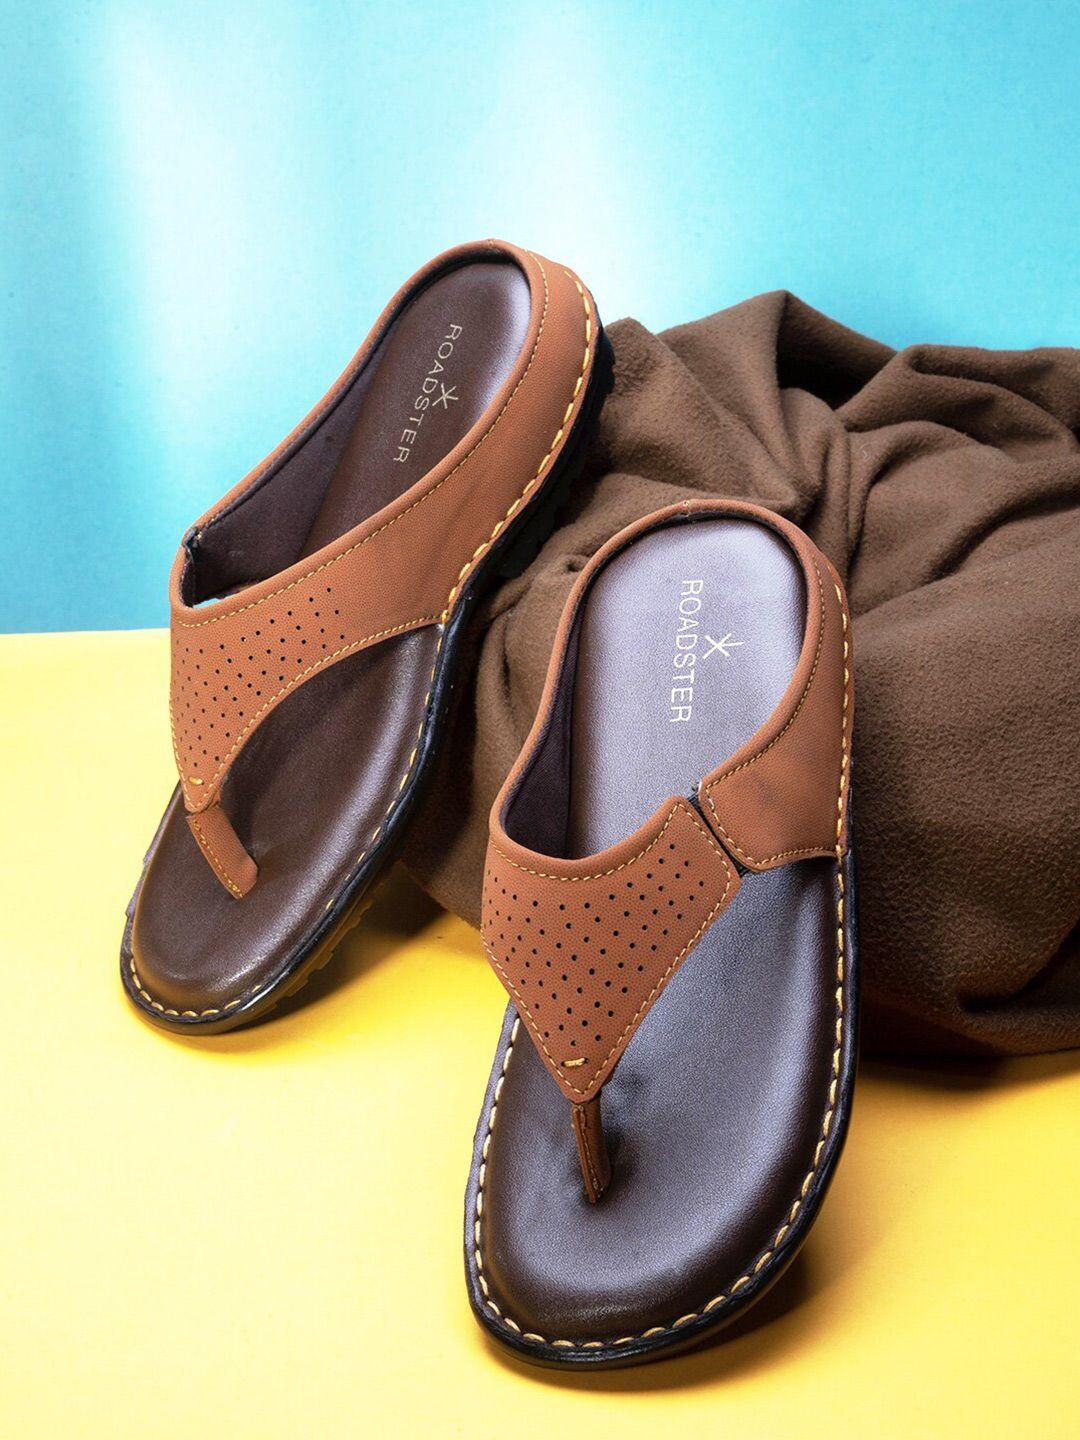 the roadster lifestyle co. men textured slip-on comfort sandals